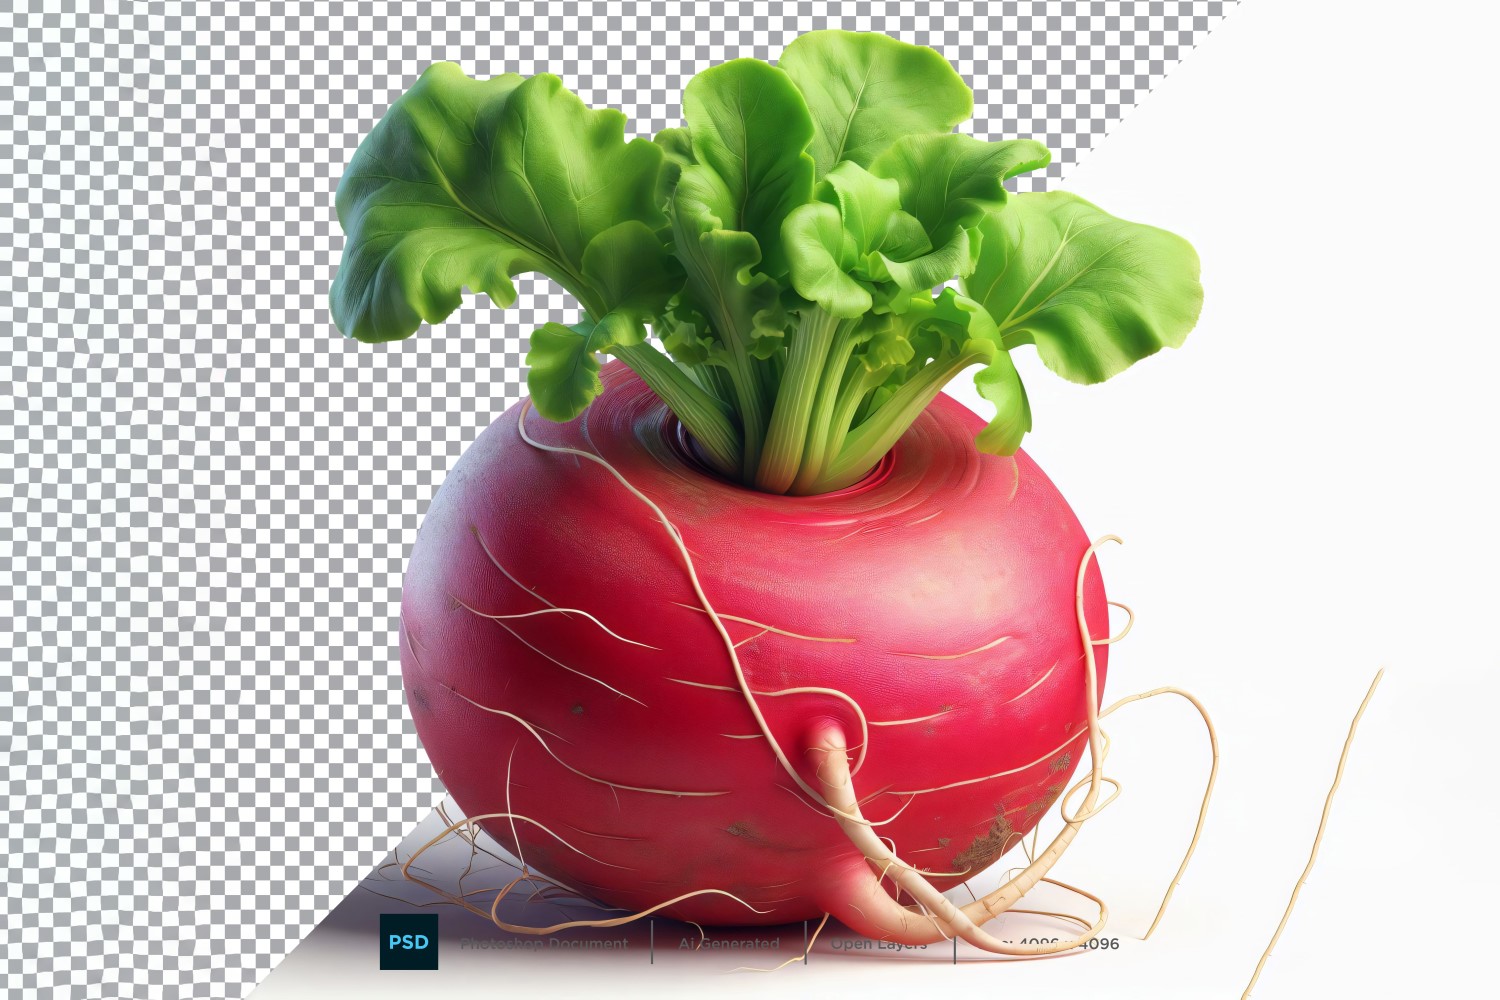 Radish Fresh Vegetable Transparent background 09